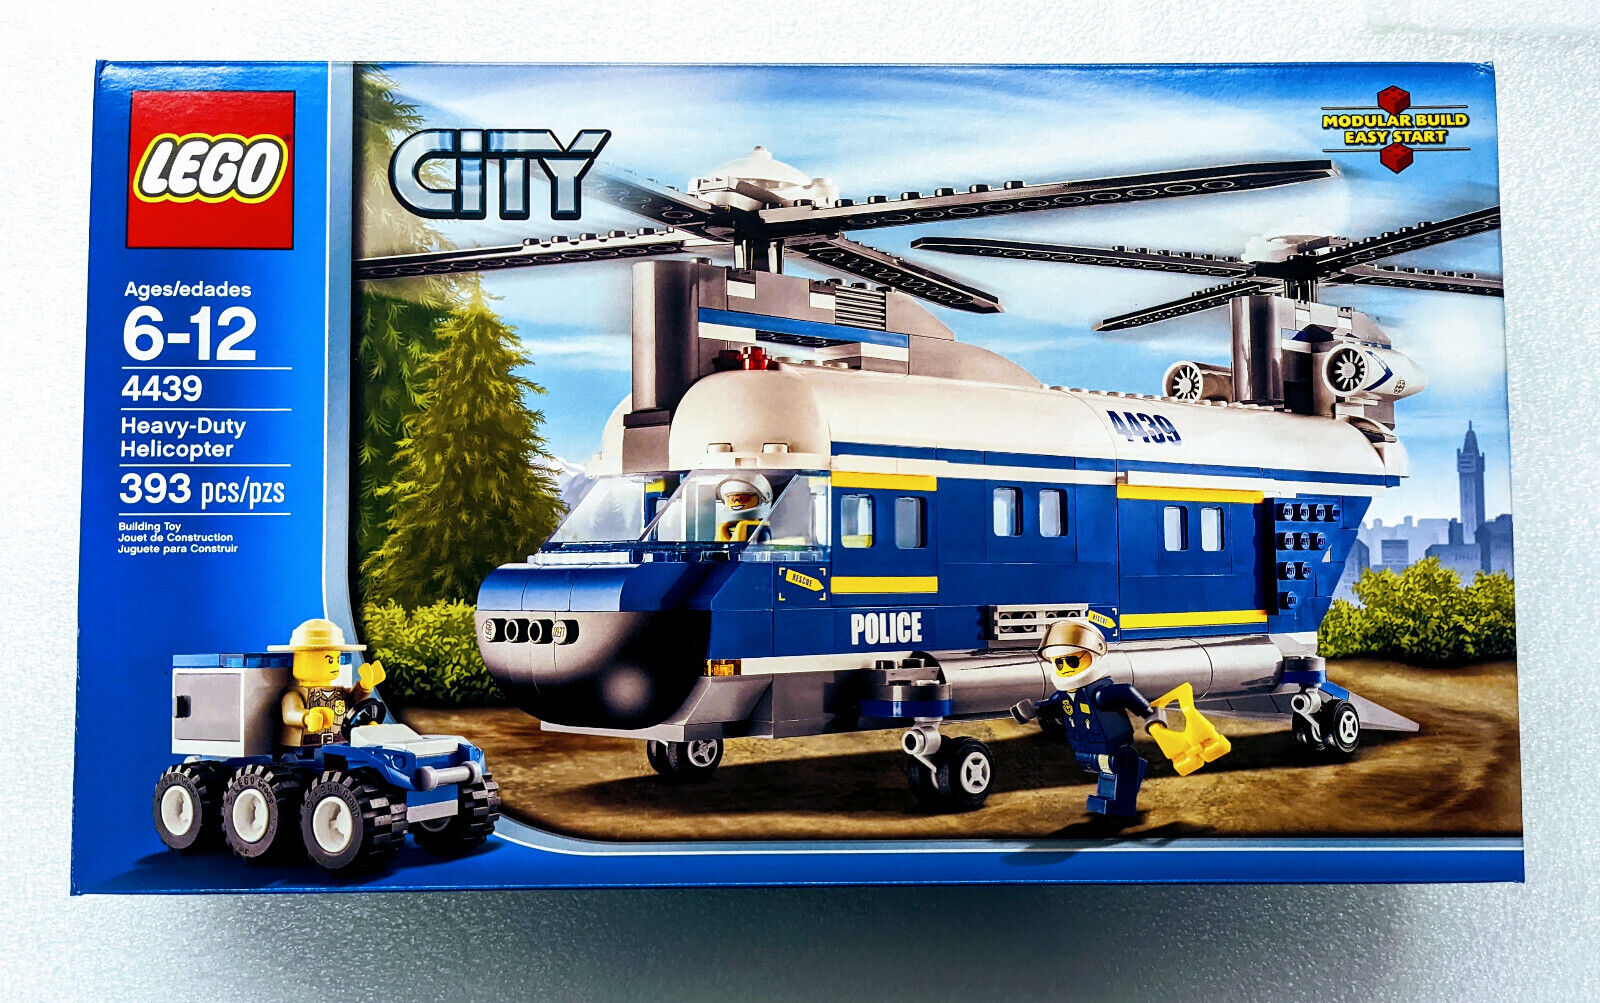 Lego 4439 - Heavy-Duty Helicopter- 393 pcs - Sealed NIB